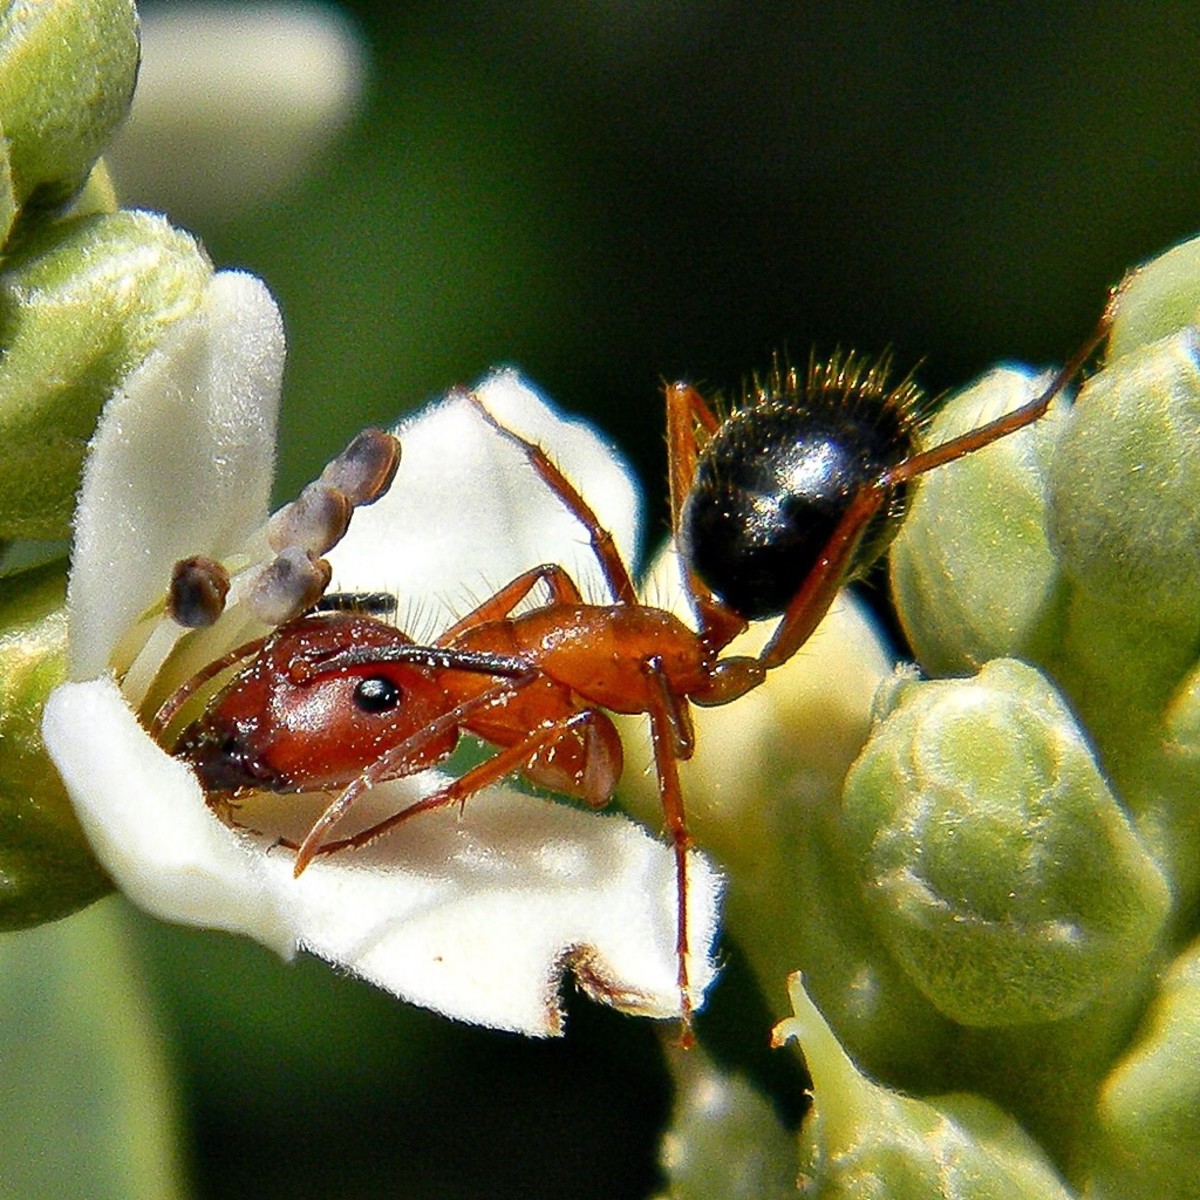 A Florida carpenter ant produces a spray of formic acid as a defence mechanism.